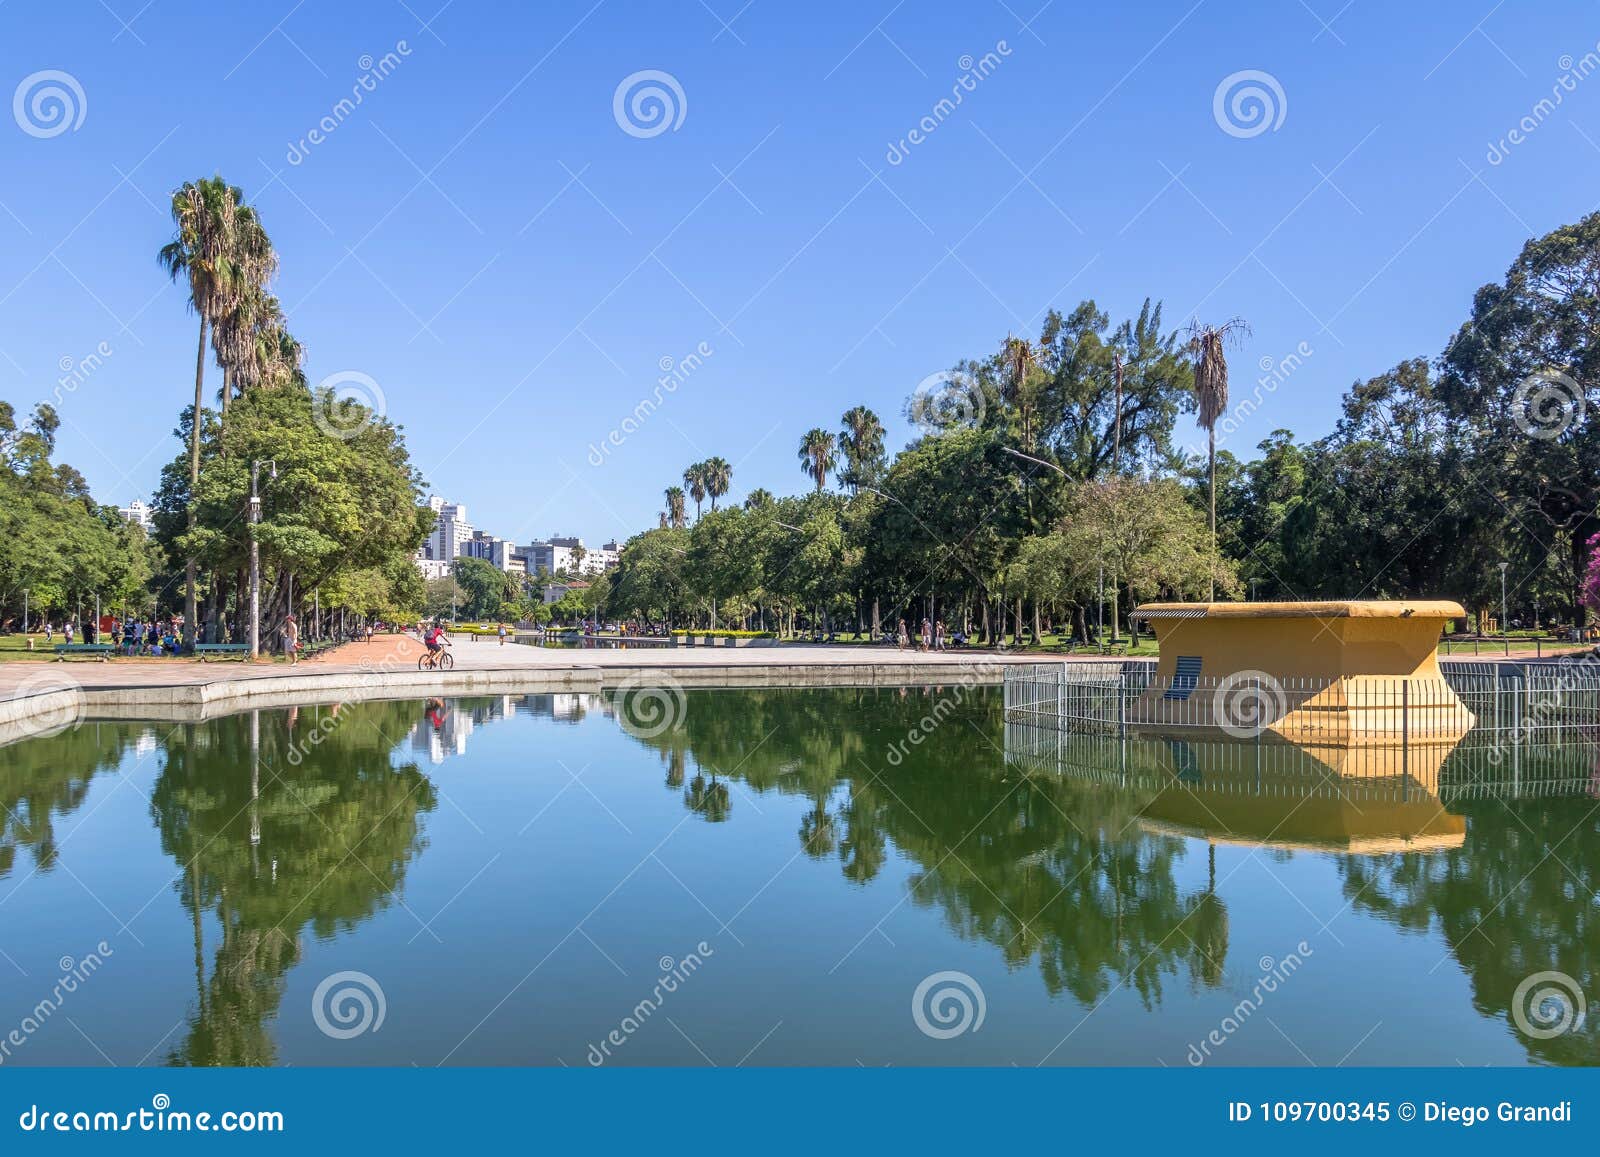 farroupilha park or redencao park reflecting pool in porto alegre, rio grande do sul, brazil